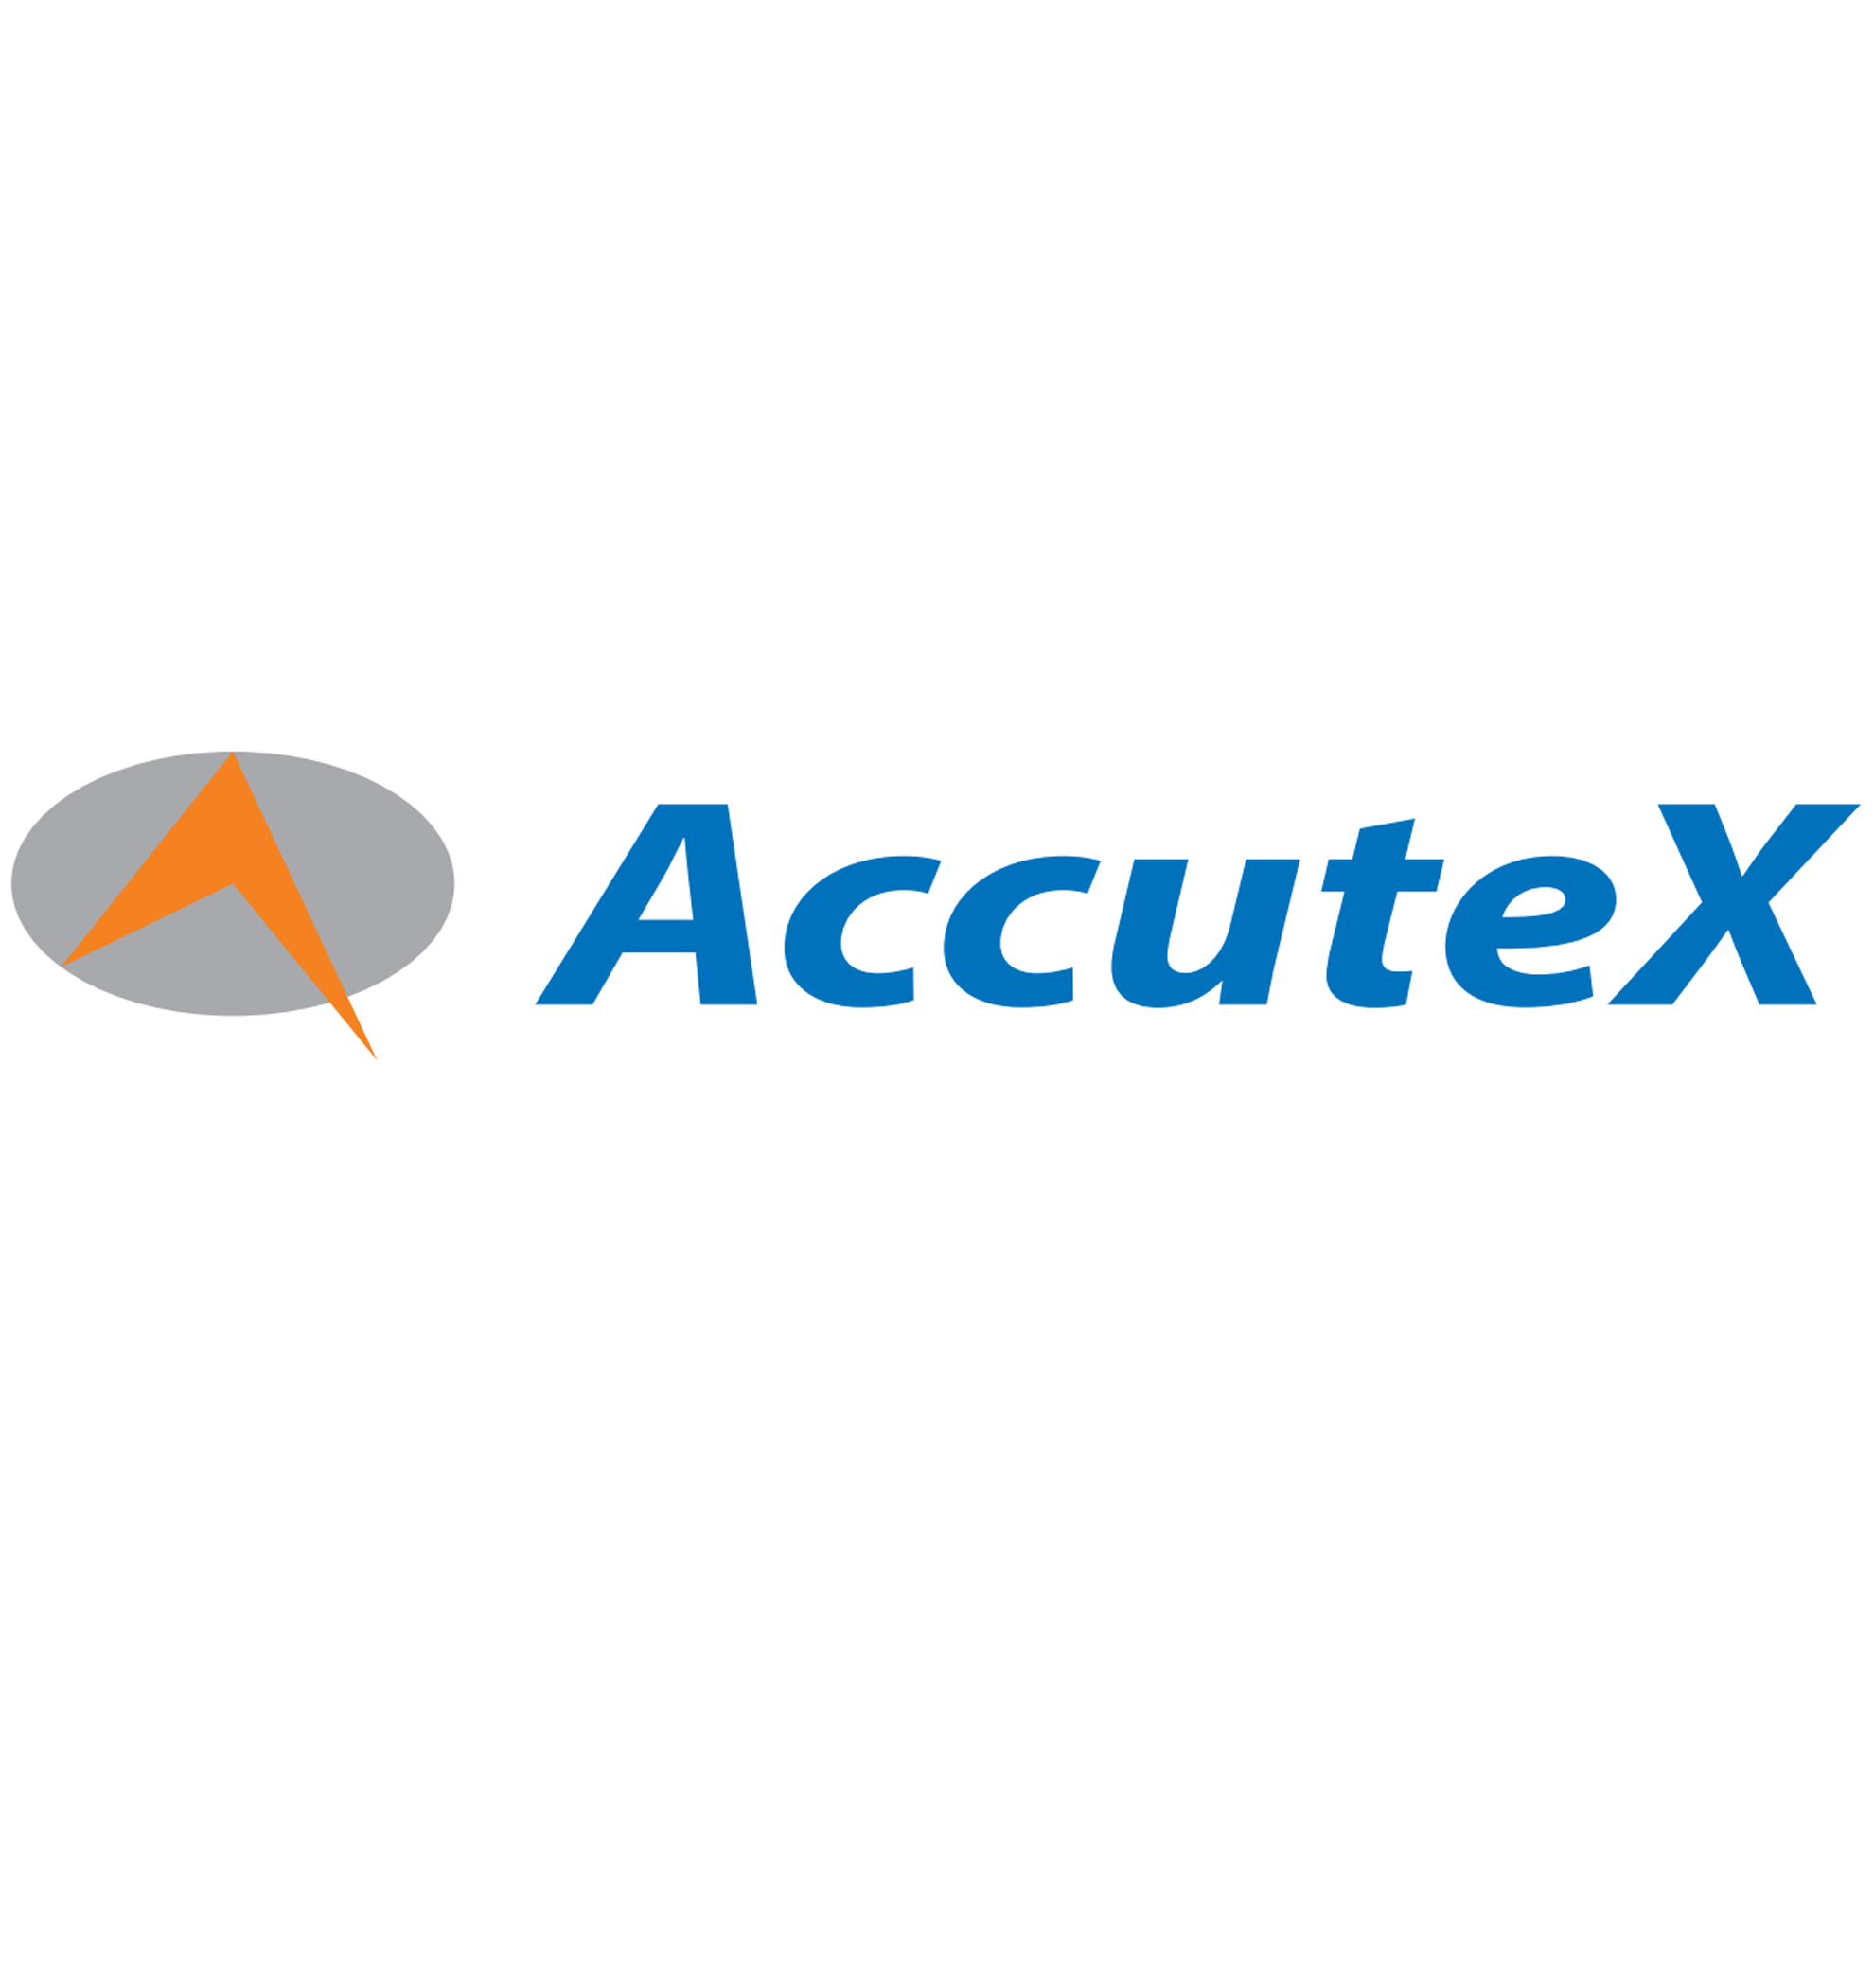 Accutex product catalog